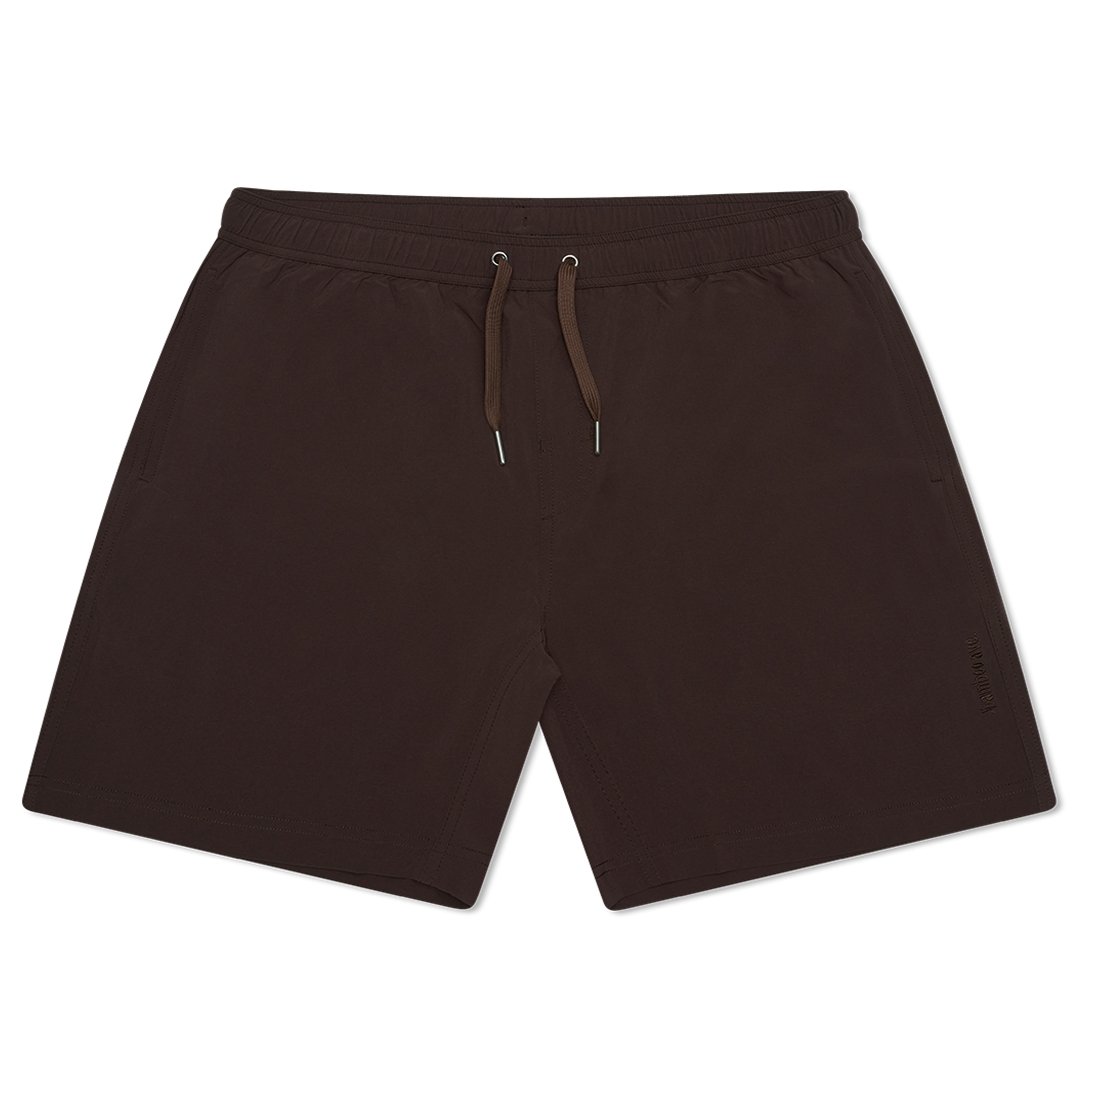 Tunnel Vision 5” - Brown Shorts - Bamboo Ave. - Men's Shorts